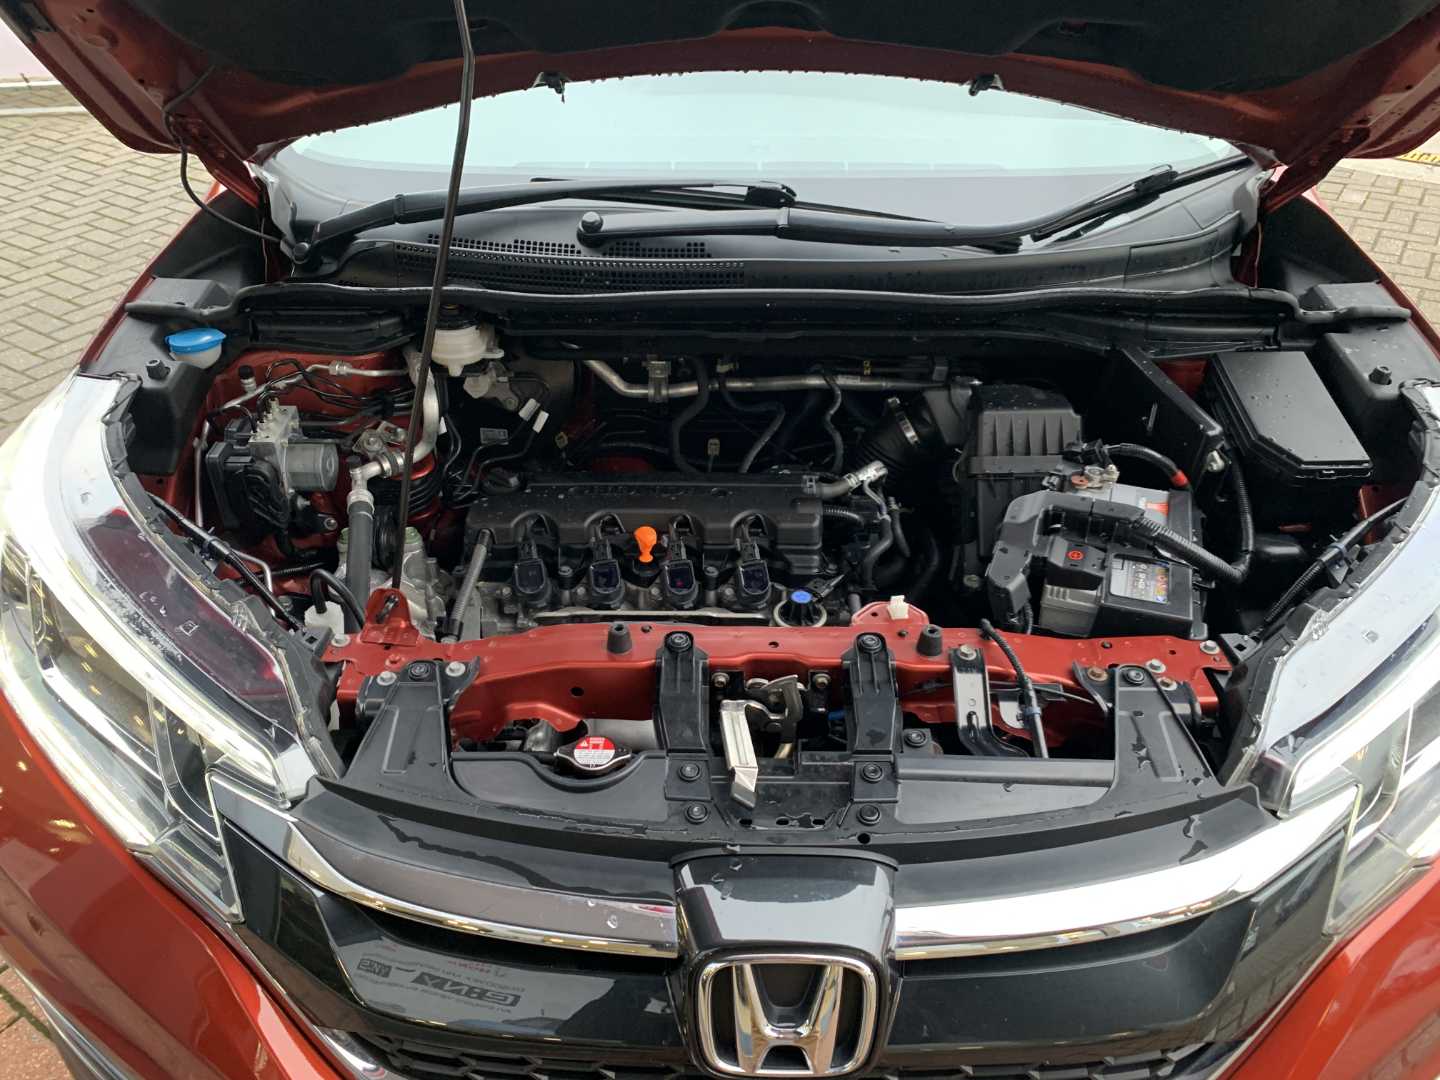 Honda CR-V 2.0 i-VTEC SE Plus 5dr Auto - Image 20